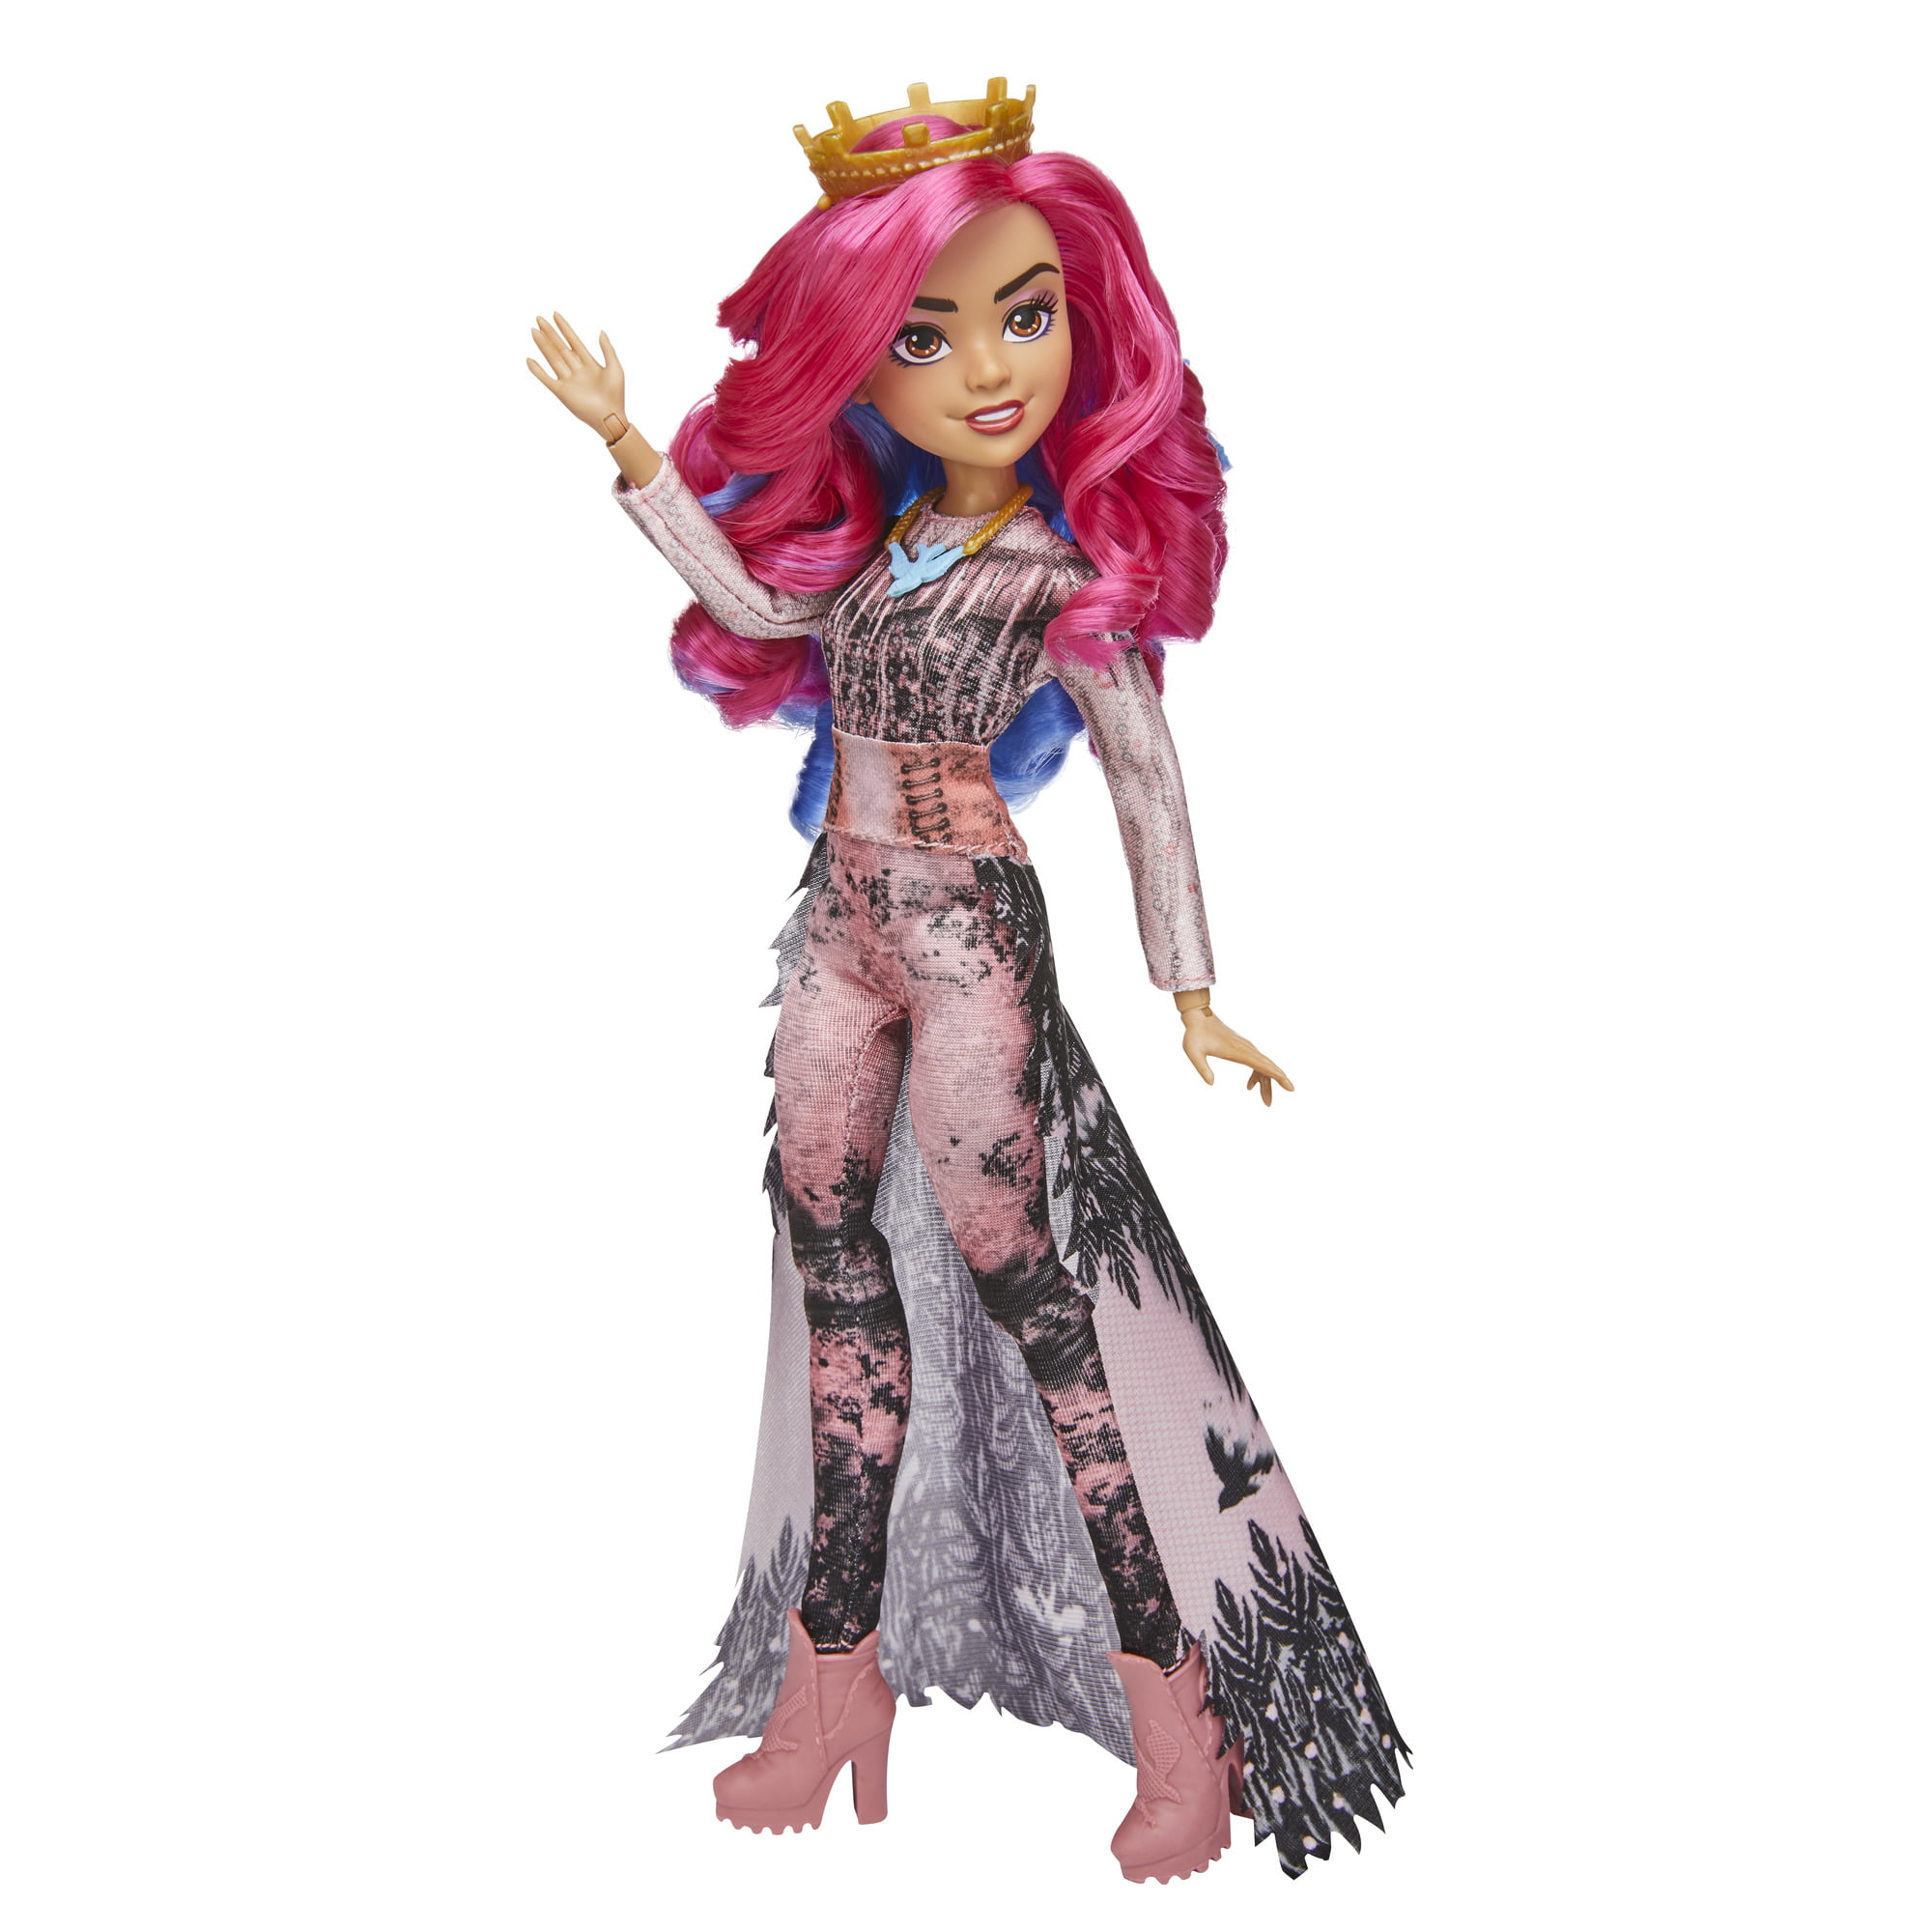 princess audrey doll